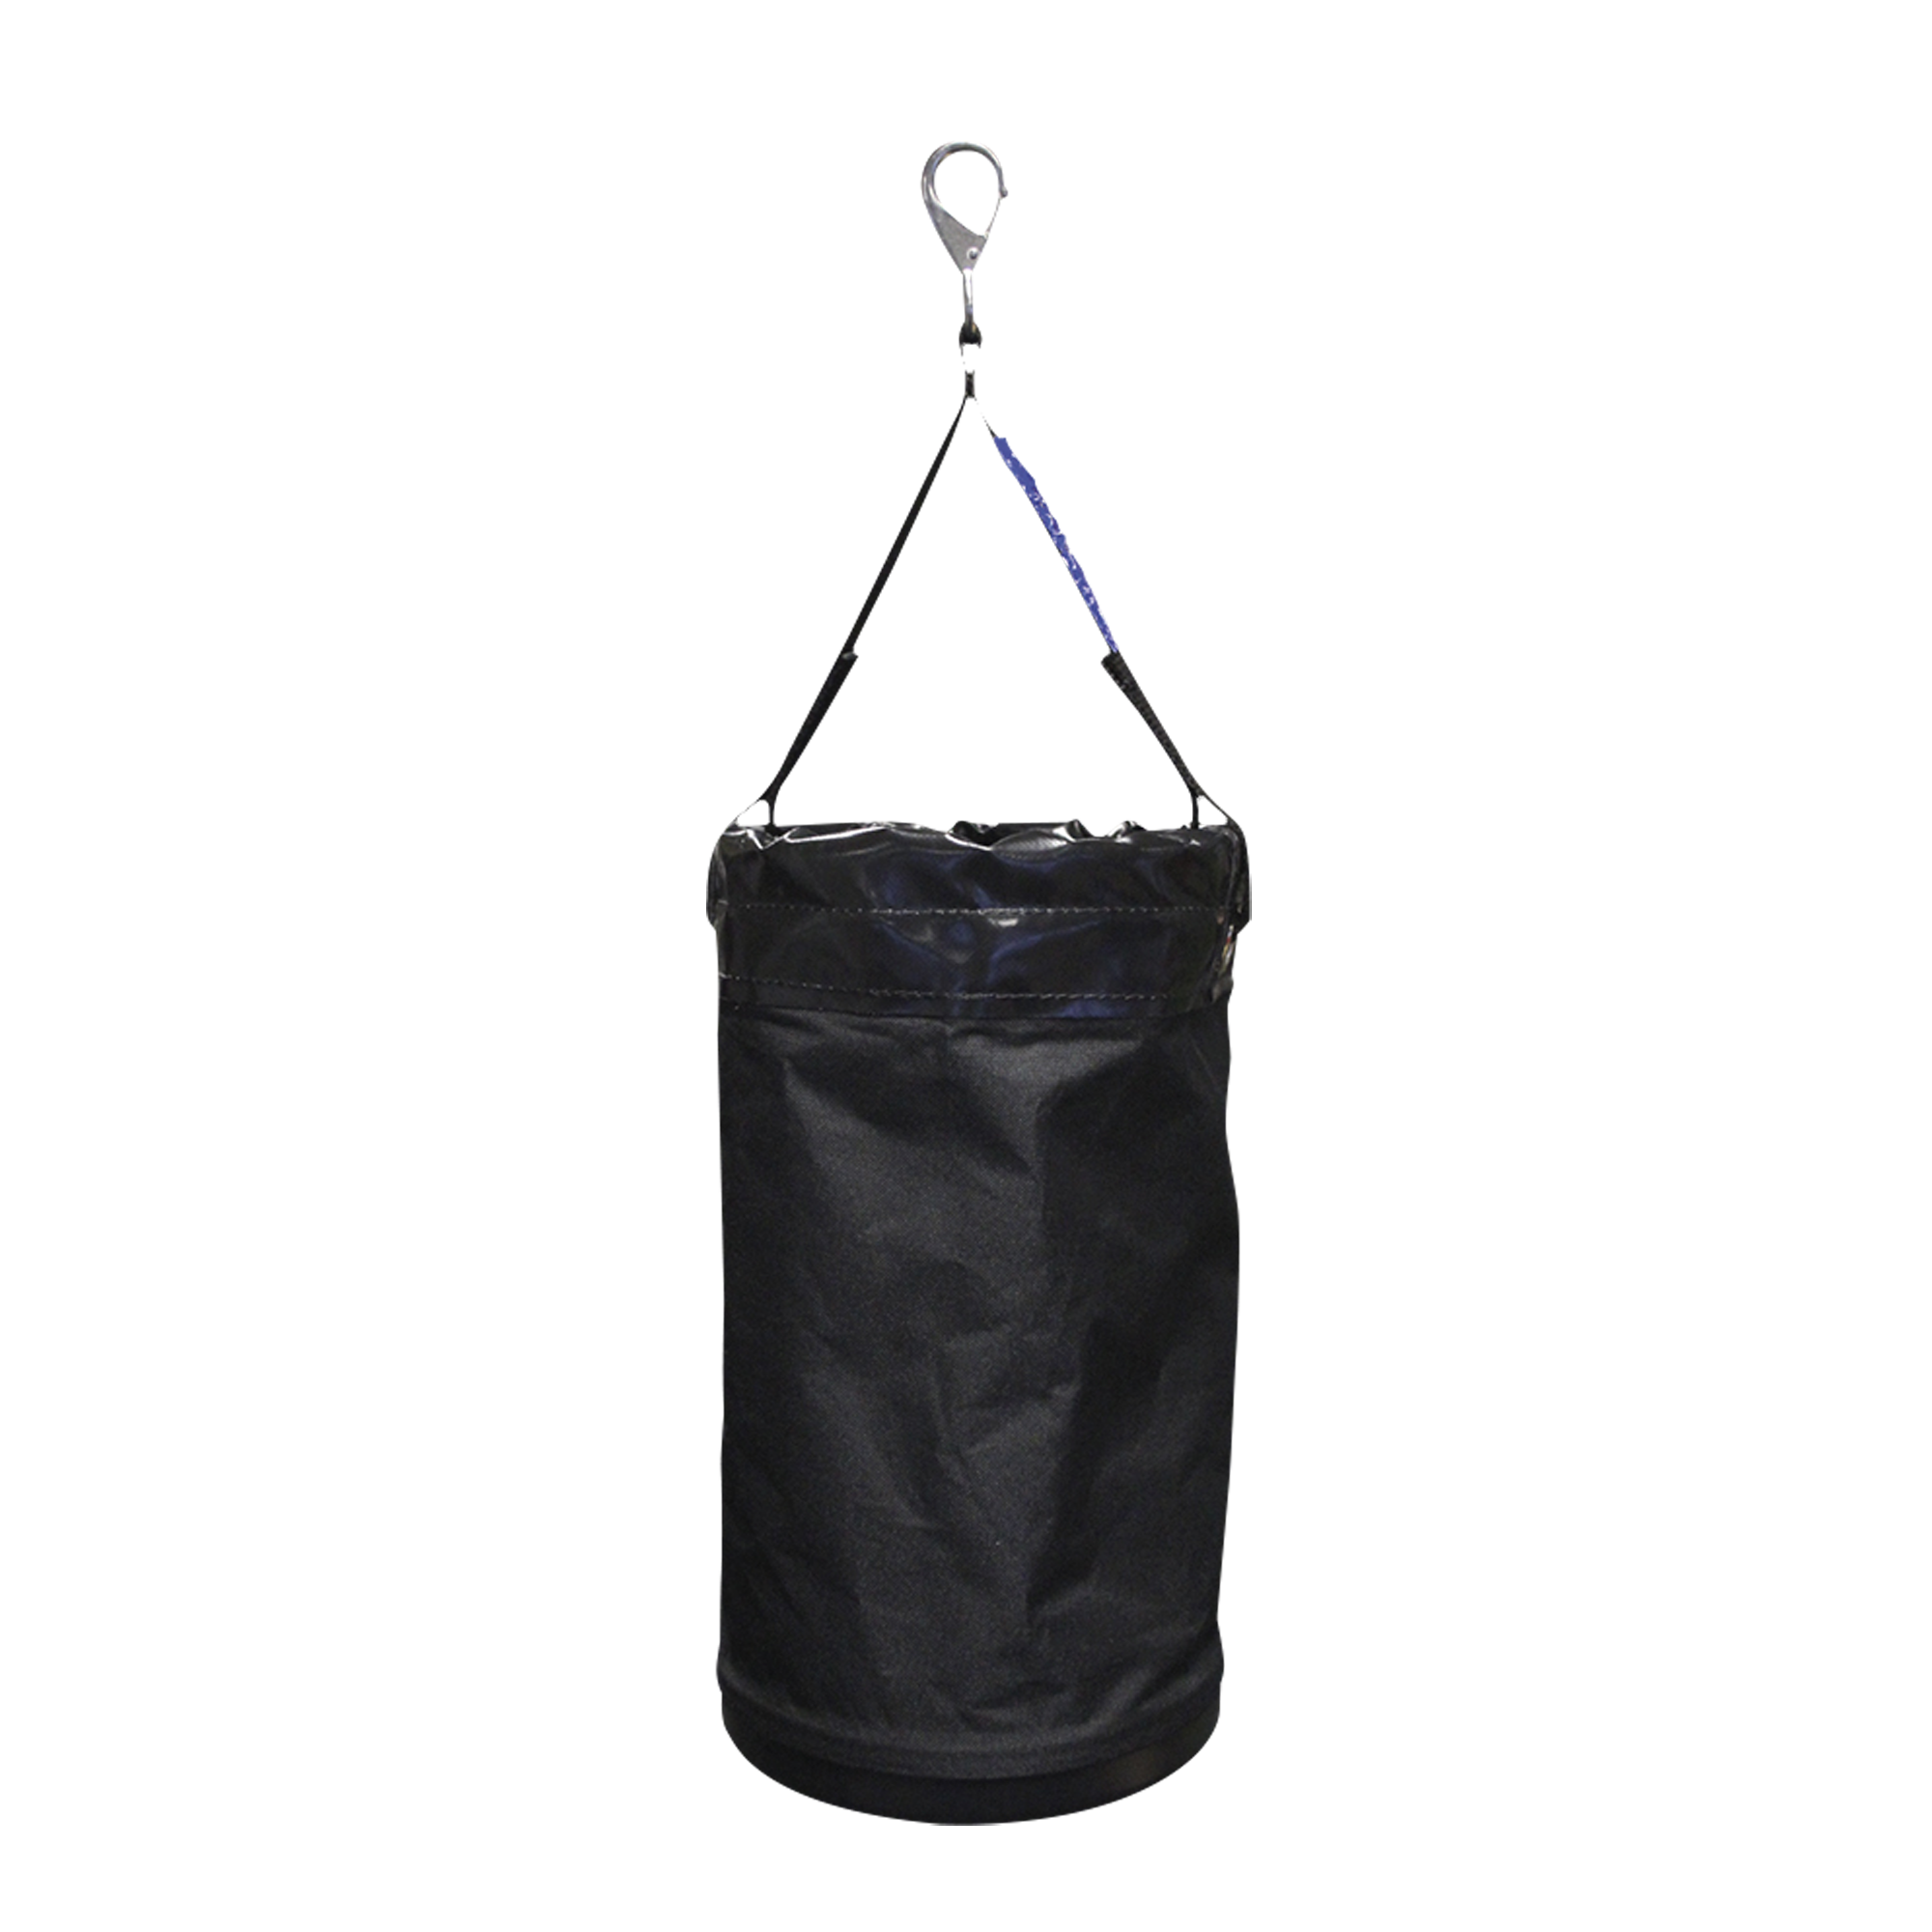 Eller Chain Bag for Chain Hoist für 1,0 t 190 mm x 37 cm